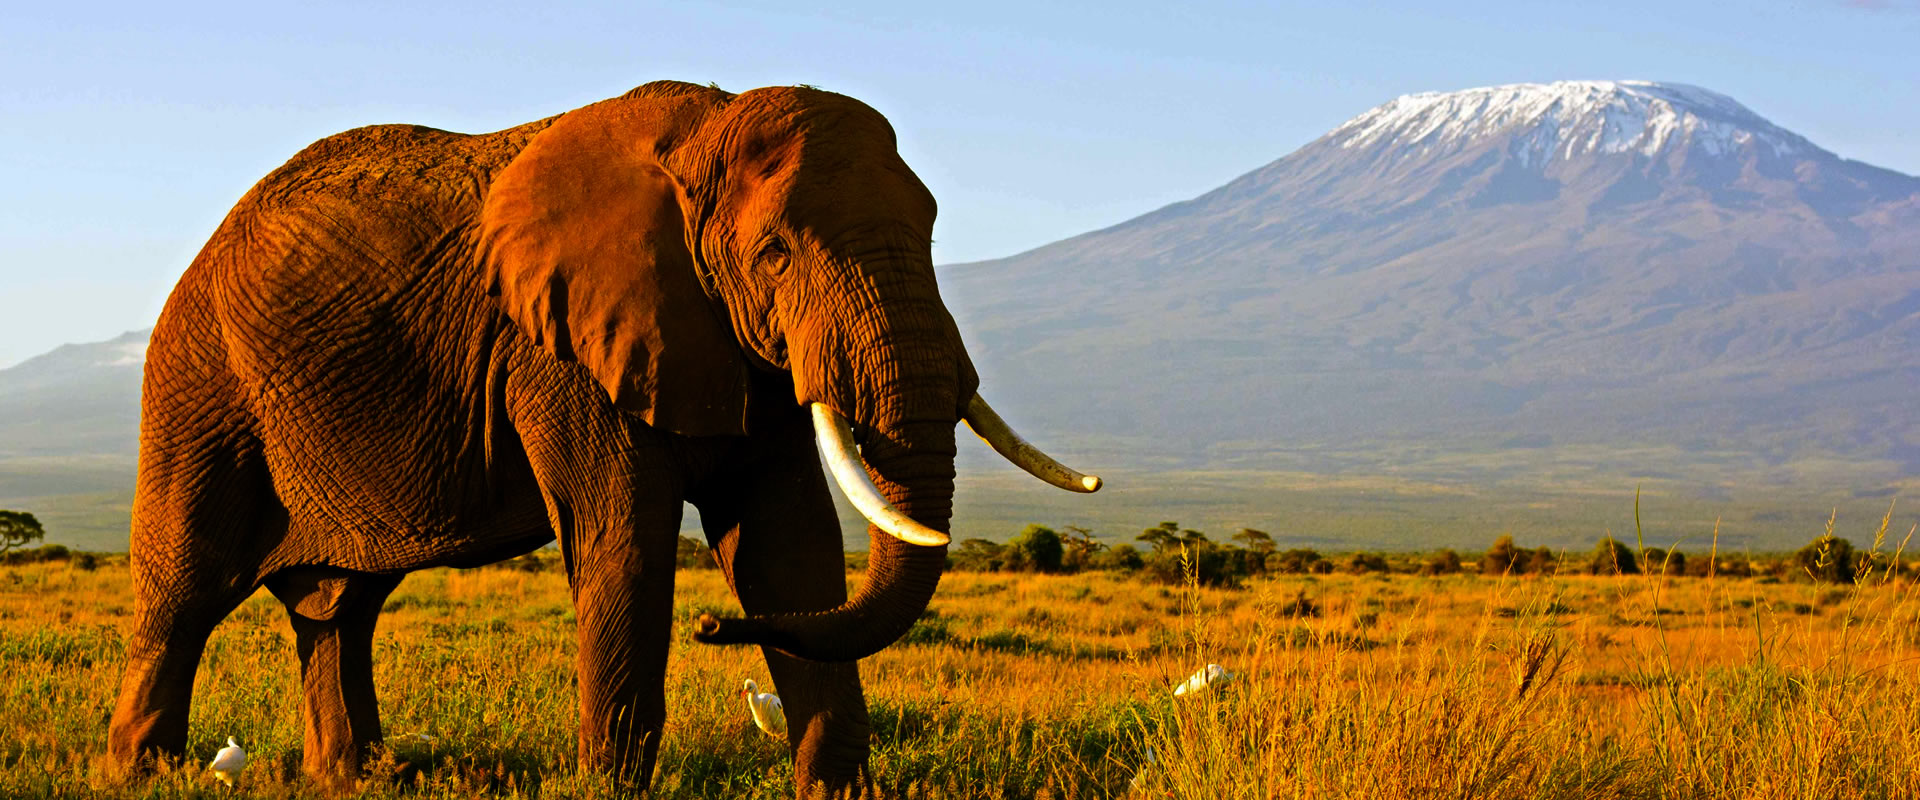 6 days kilimanjaro safari